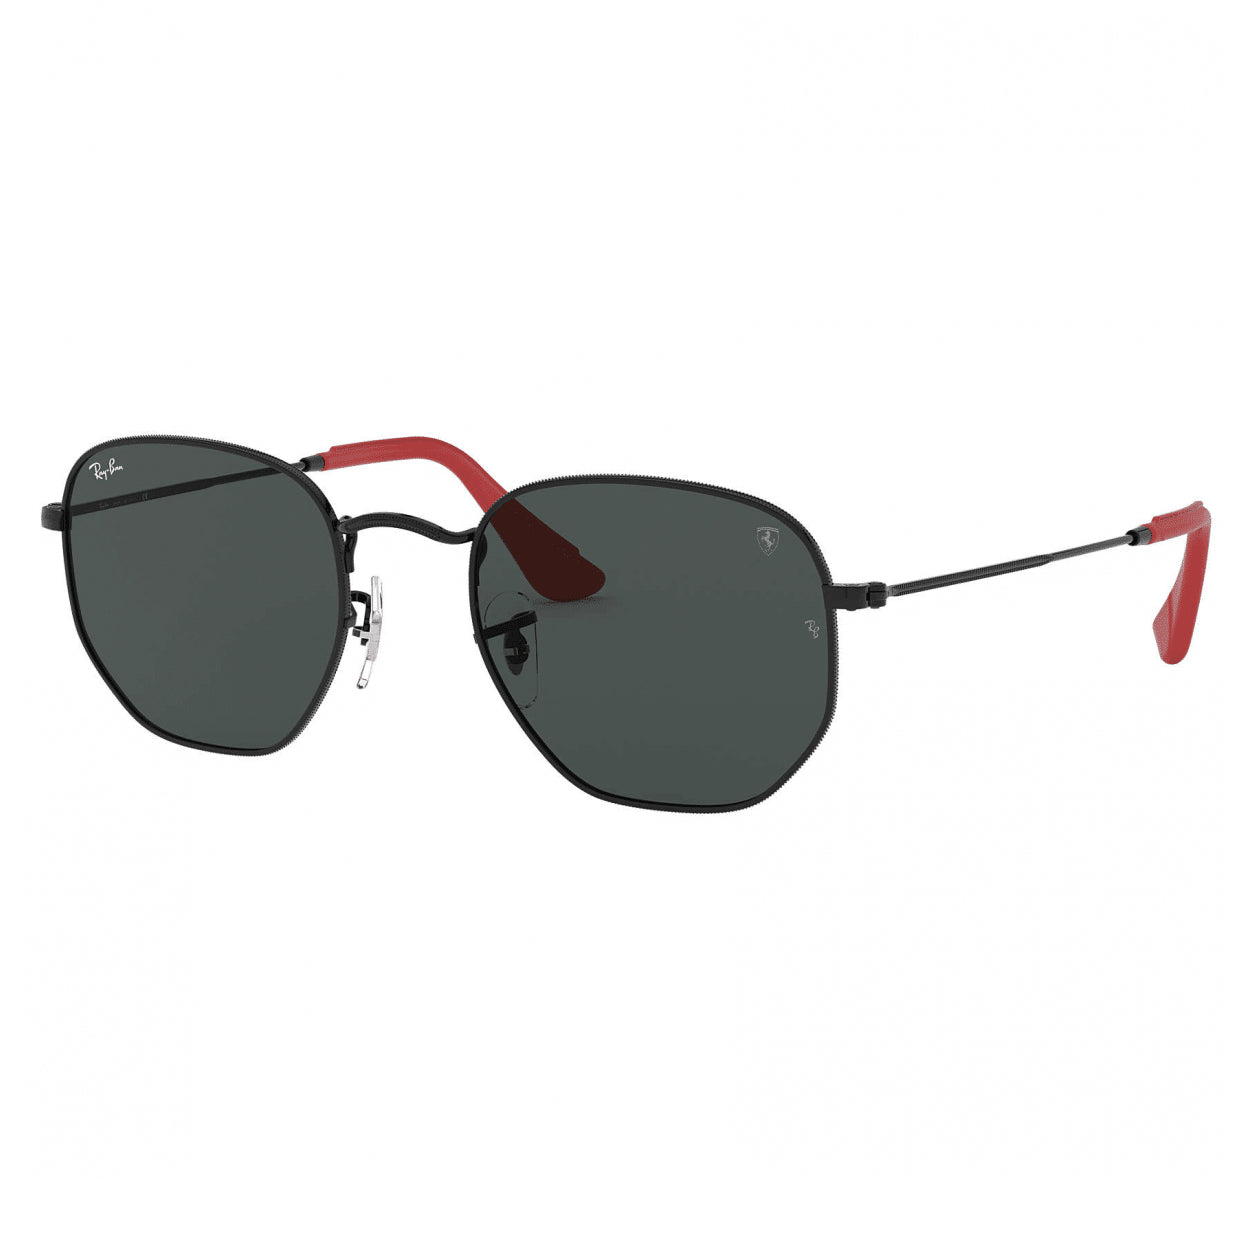 Ray-Ban Men's Sunglasses Ferrari Series Square Black RB3548M F002/62